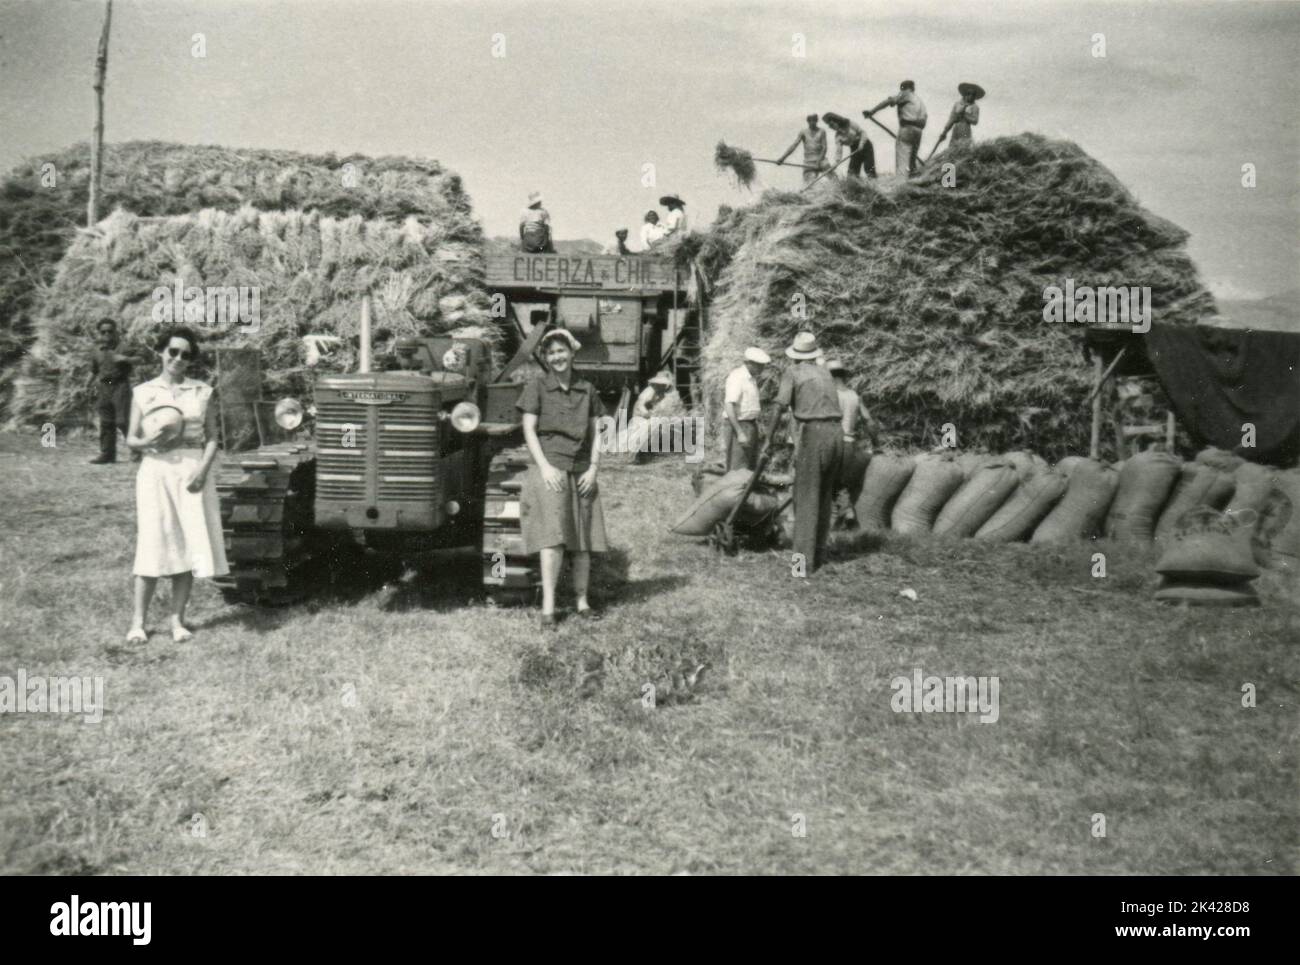 Threshing in the farmyard with thresher Cigerza & Chiesa, Italy 1940s Stock Photo